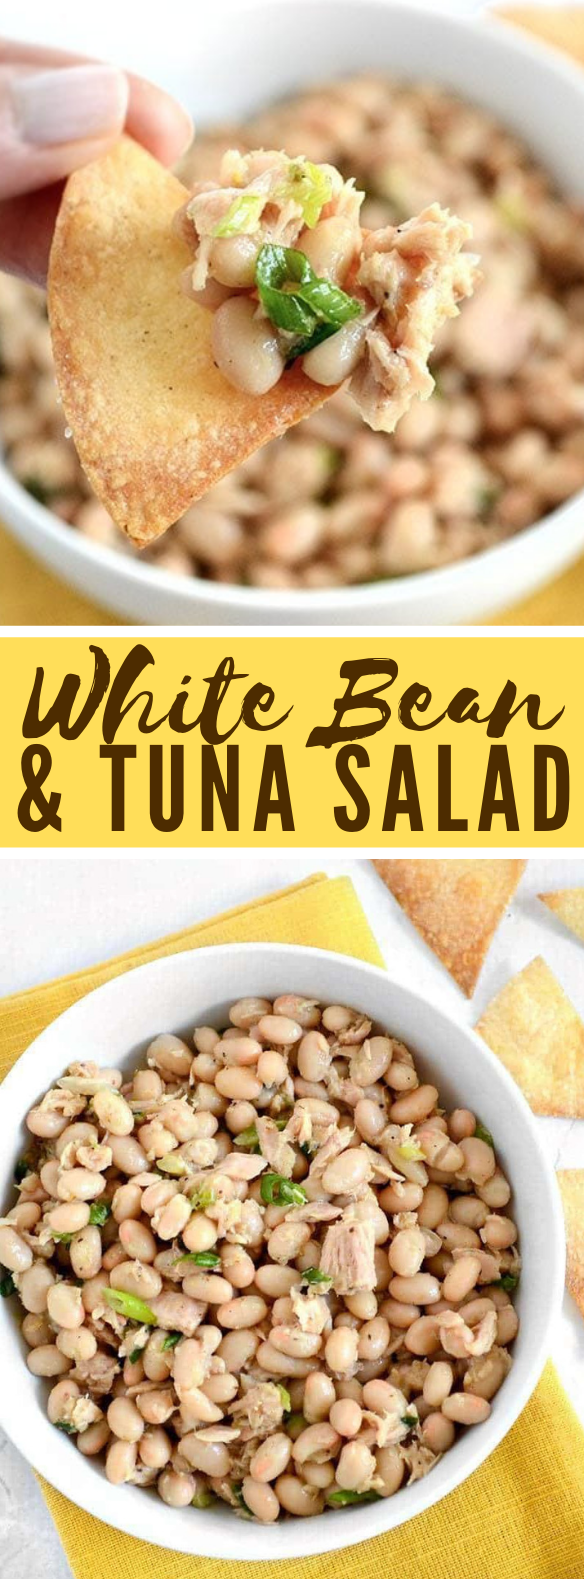 TUNA & WHITE BEAN SALAD #vegetarian #mealprep